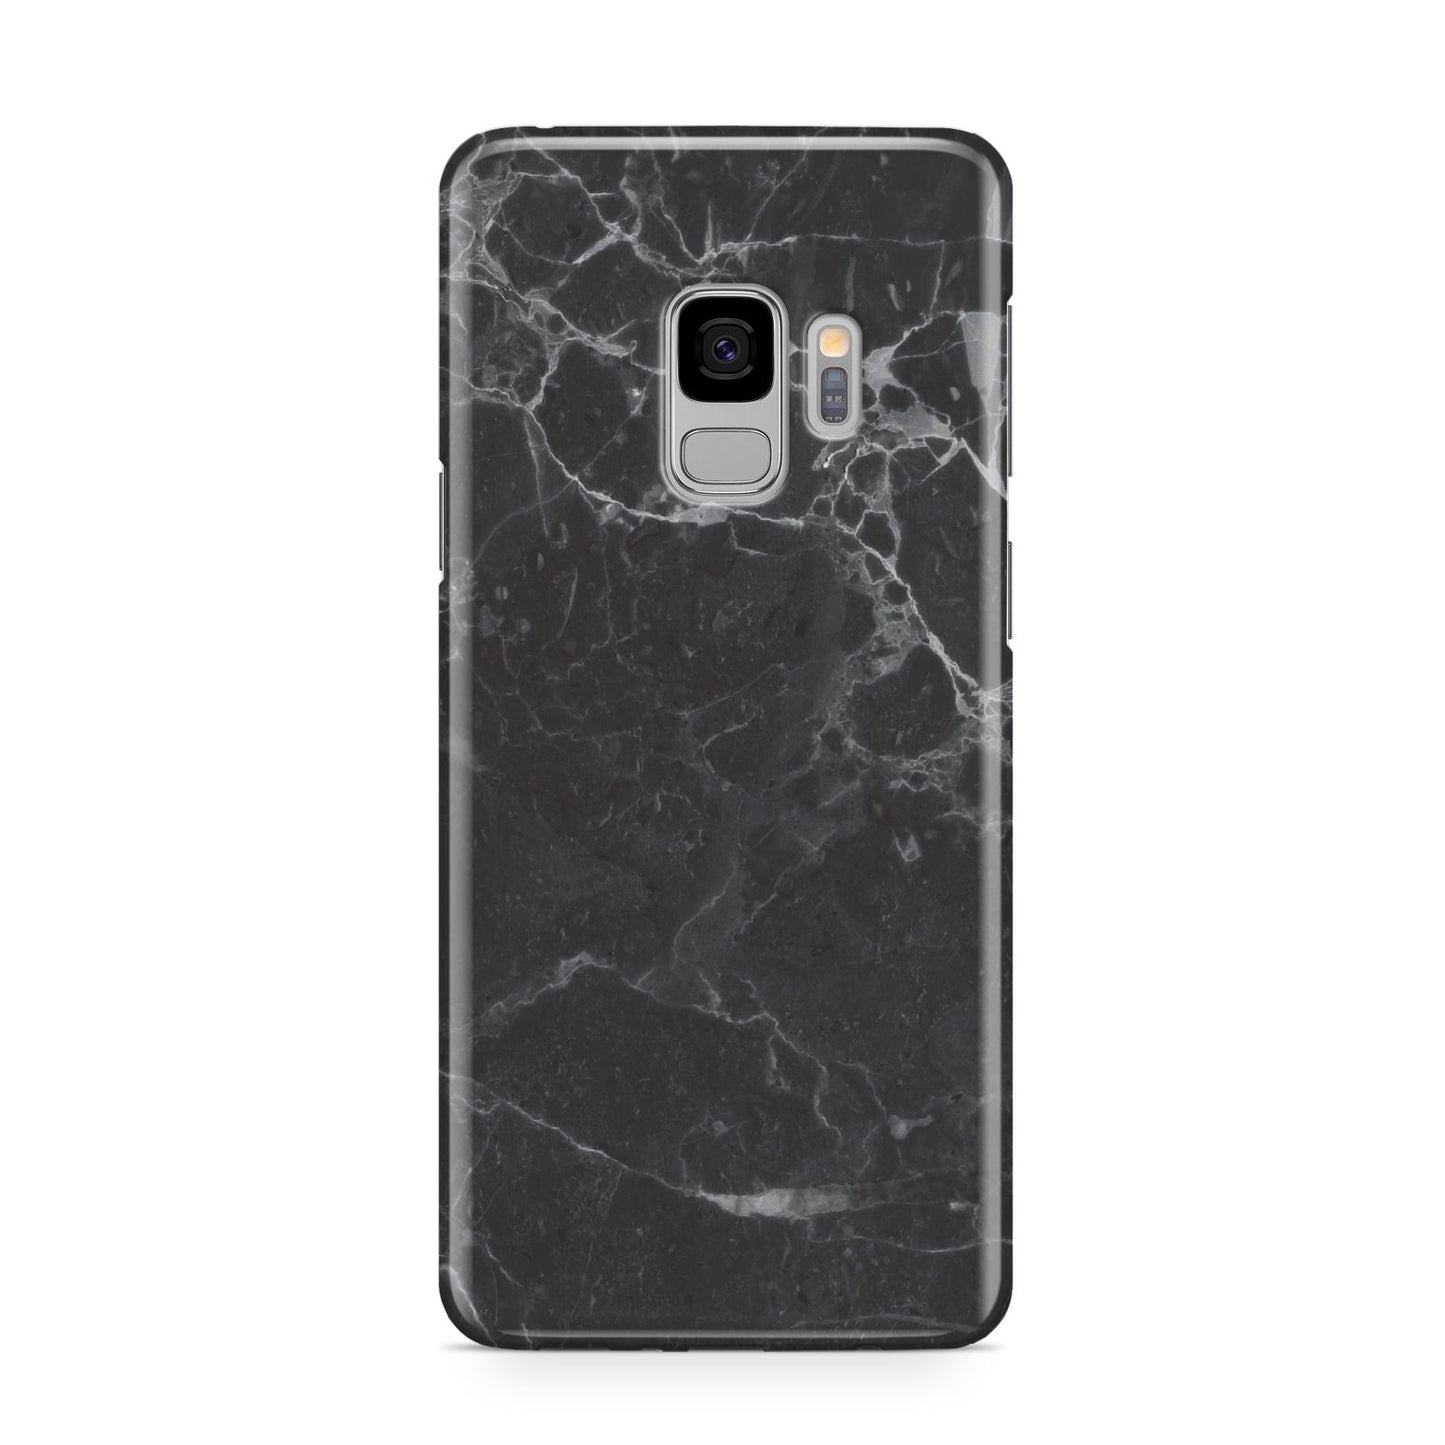 Faux Marble Effect Black Samsung Galaxy S9 Case